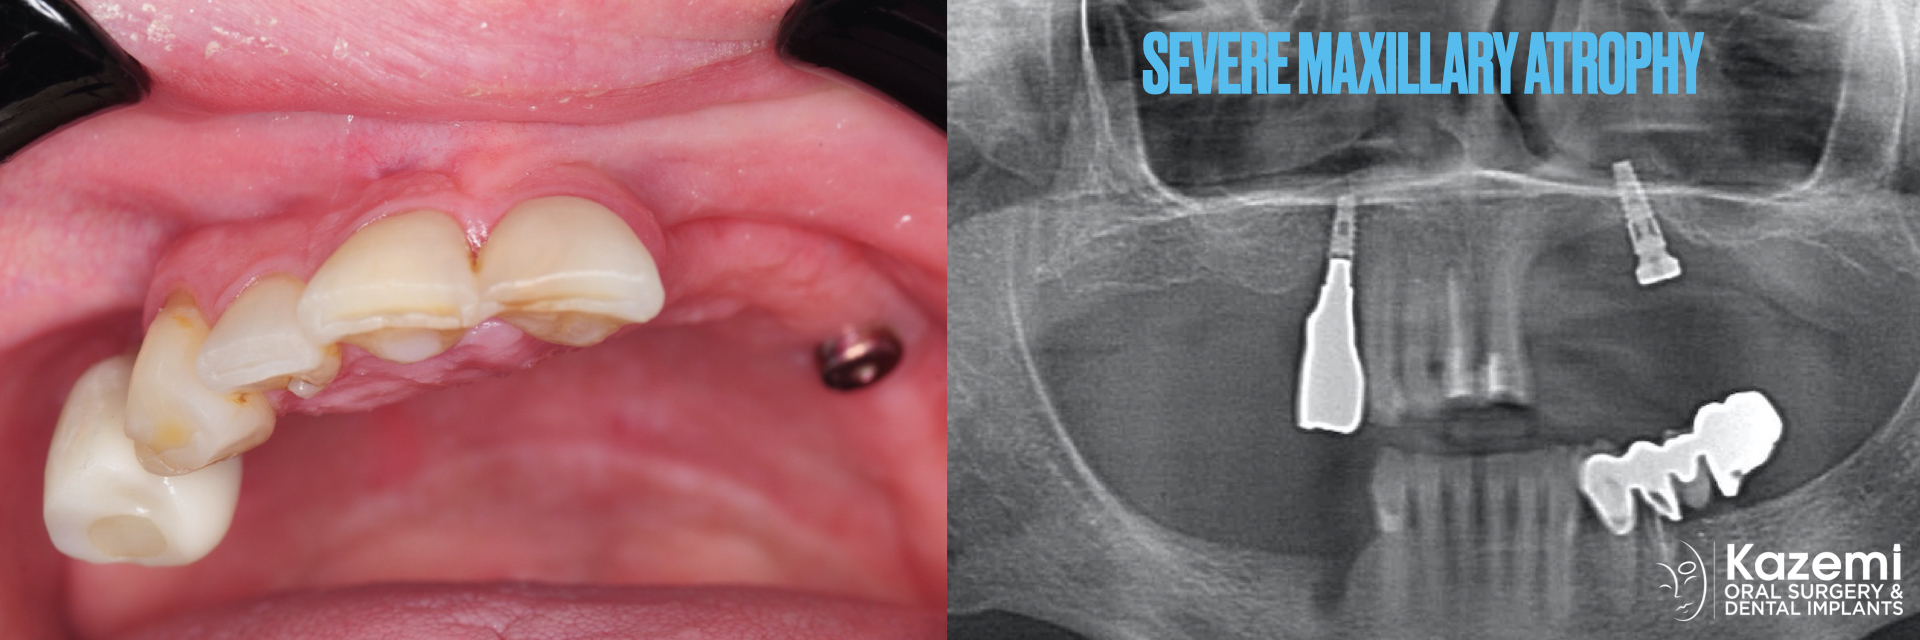 zygomatic-pterygoid-dental-implants-severe-bone-loss-kazemi-oral-surgery-2